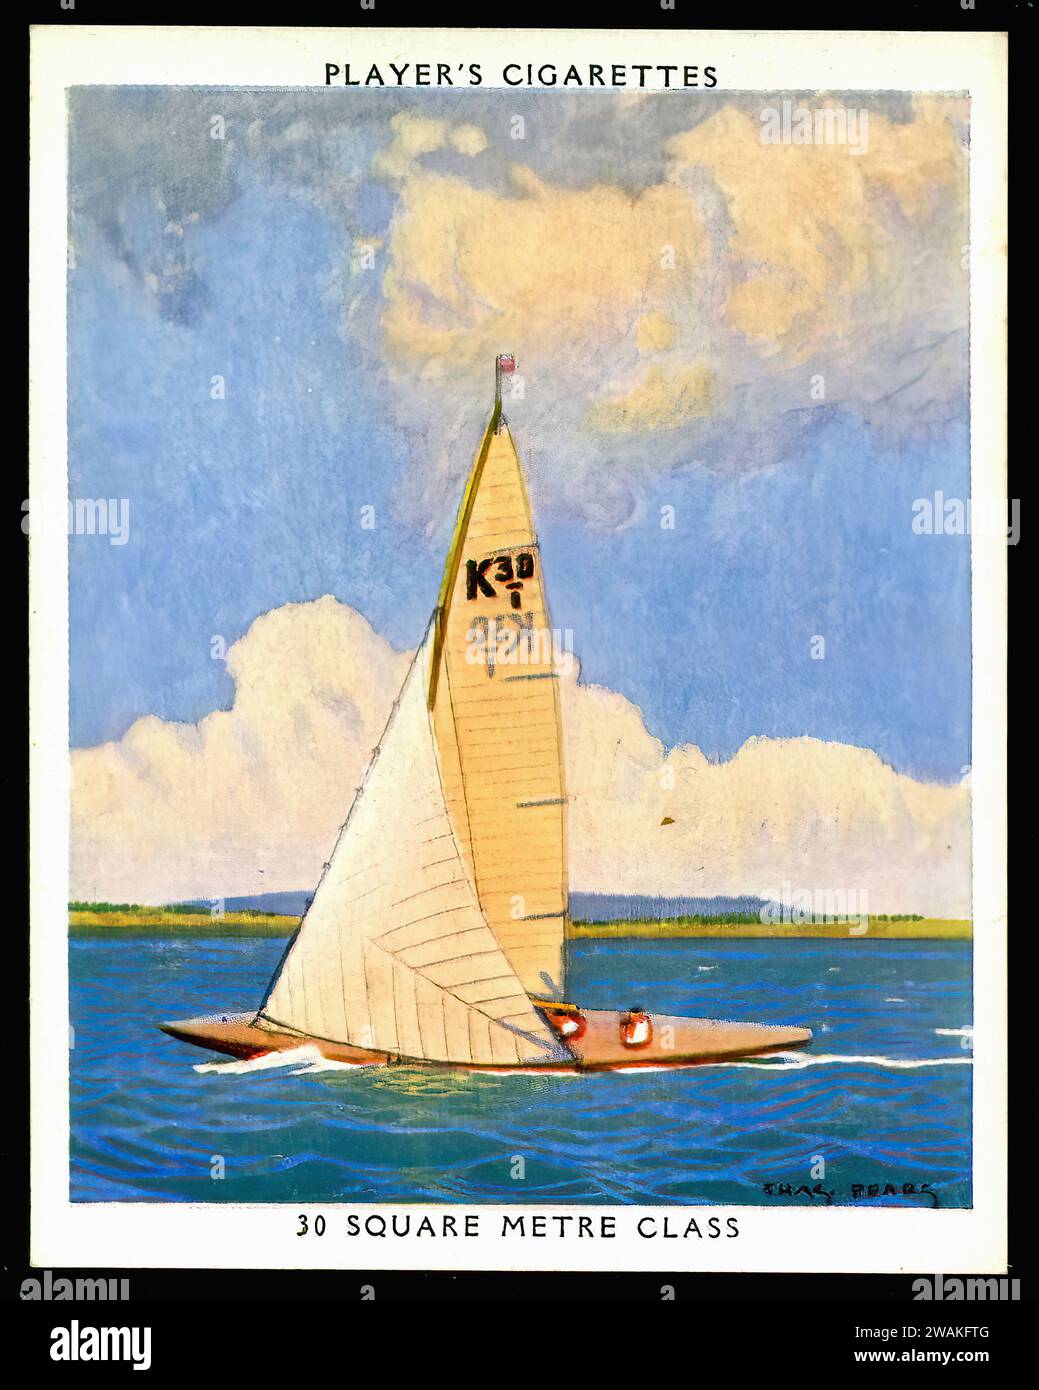 30 Quadratmeter Klasse Racing Yacht - Vintage Zigarettenkarte Illustration Stockfoto